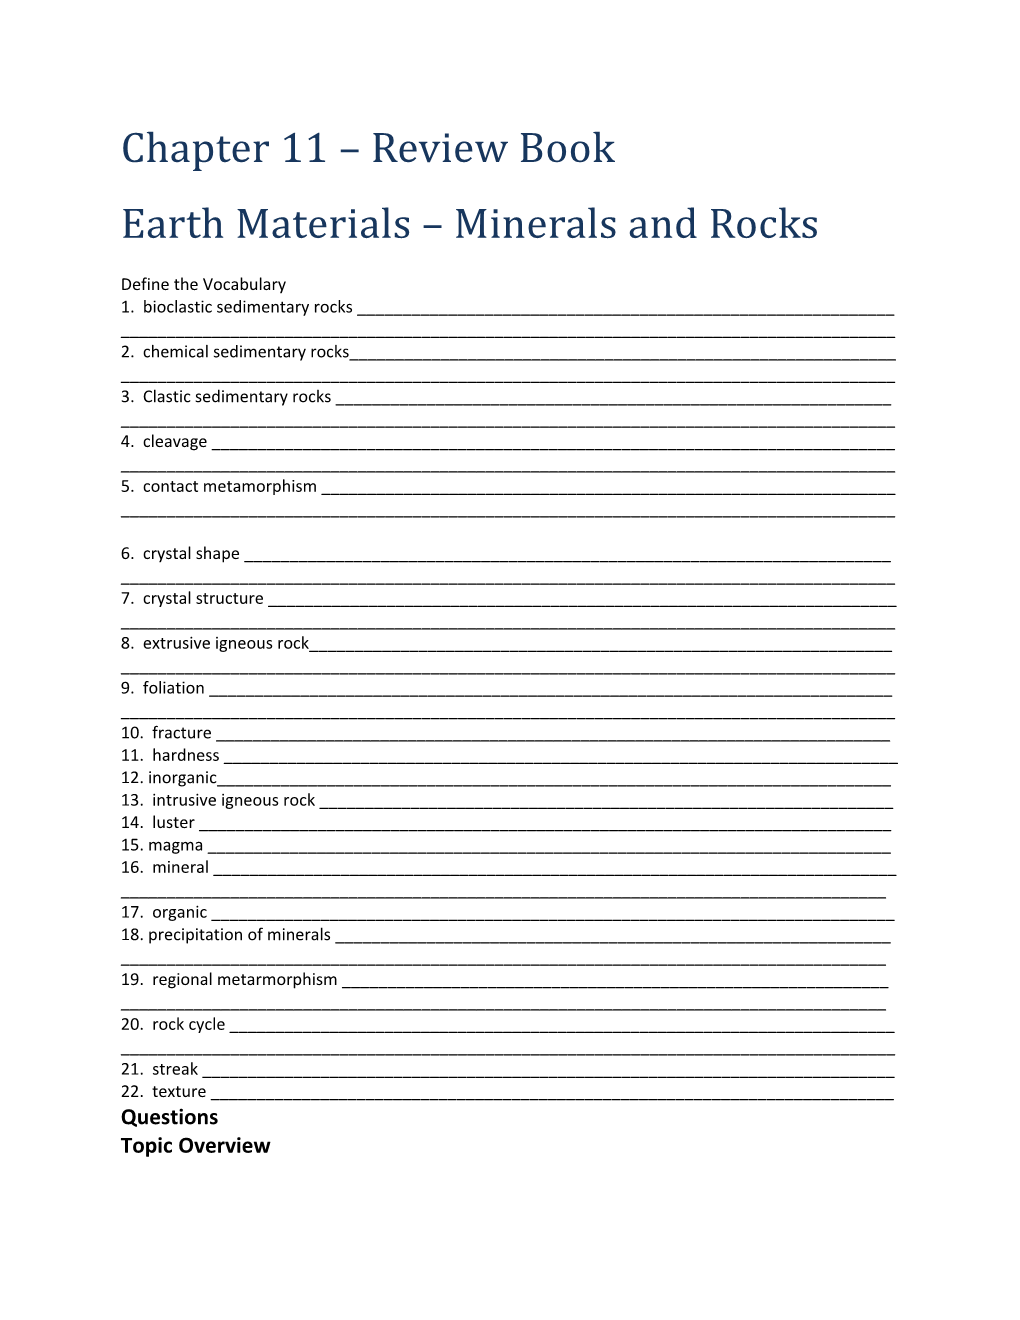 Earth Materials Minerals and Rocks